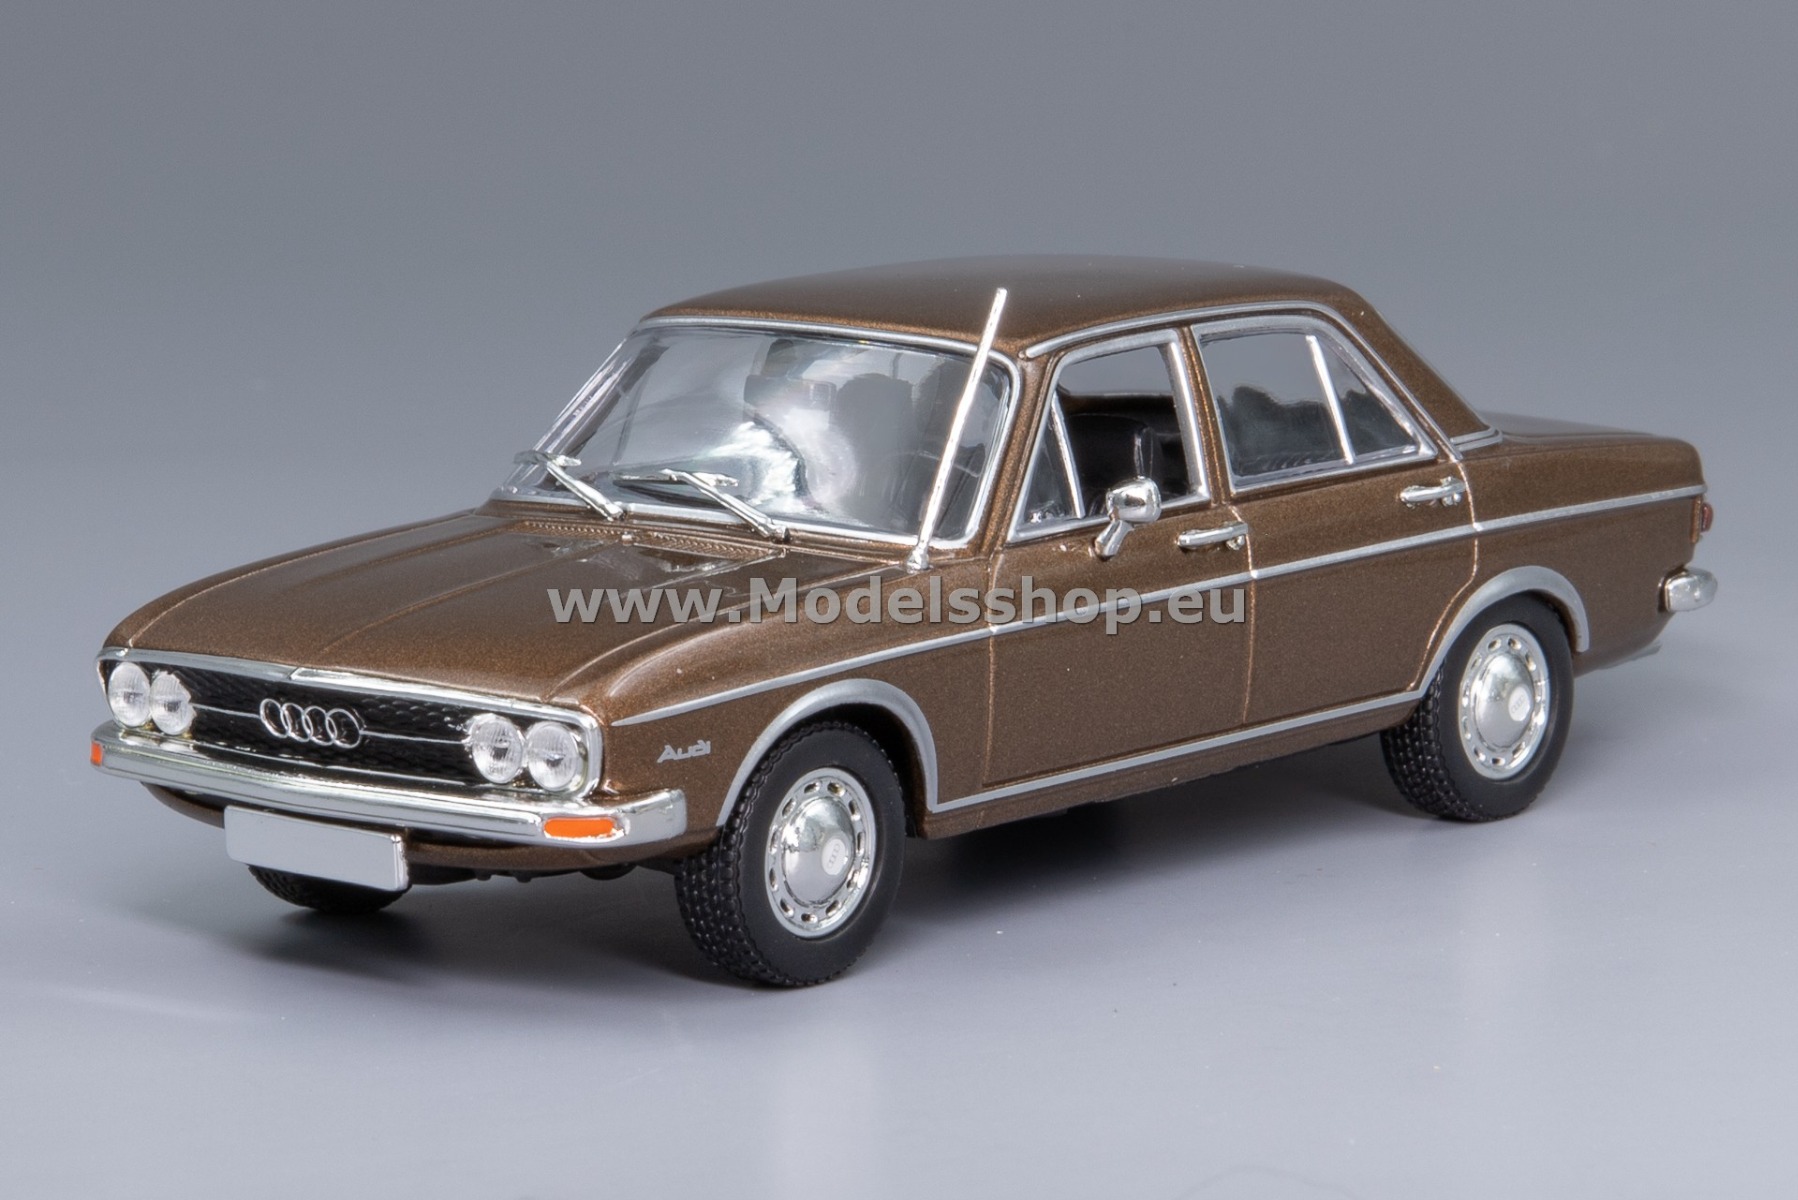 Maxichamps 940019101 Audi 100, 1969 /brown metallic/